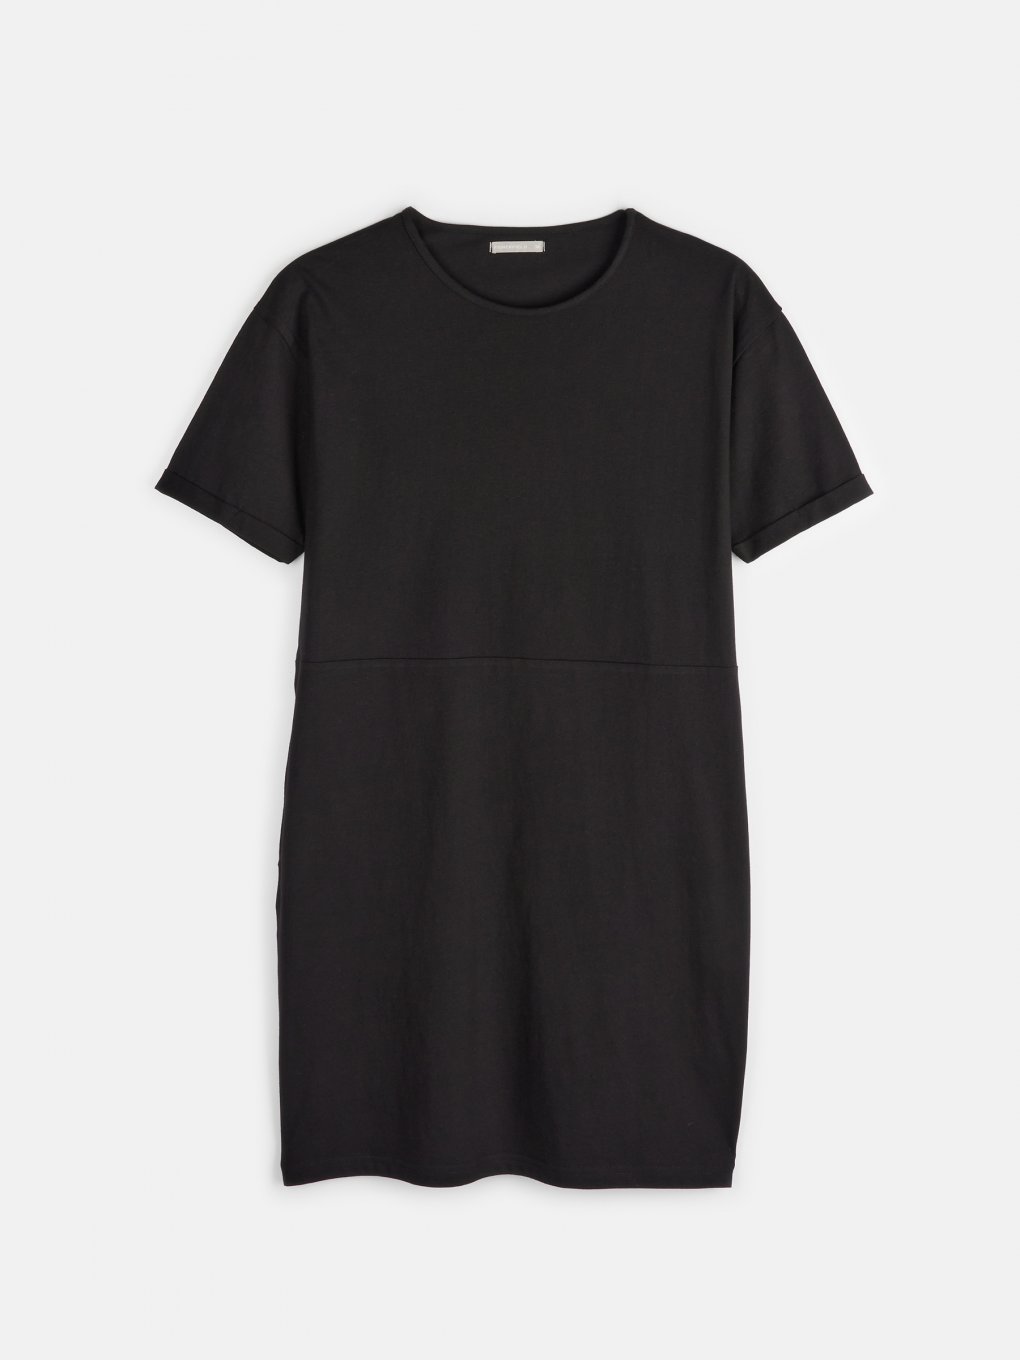 Basic cotton t-shirt dress with pockets